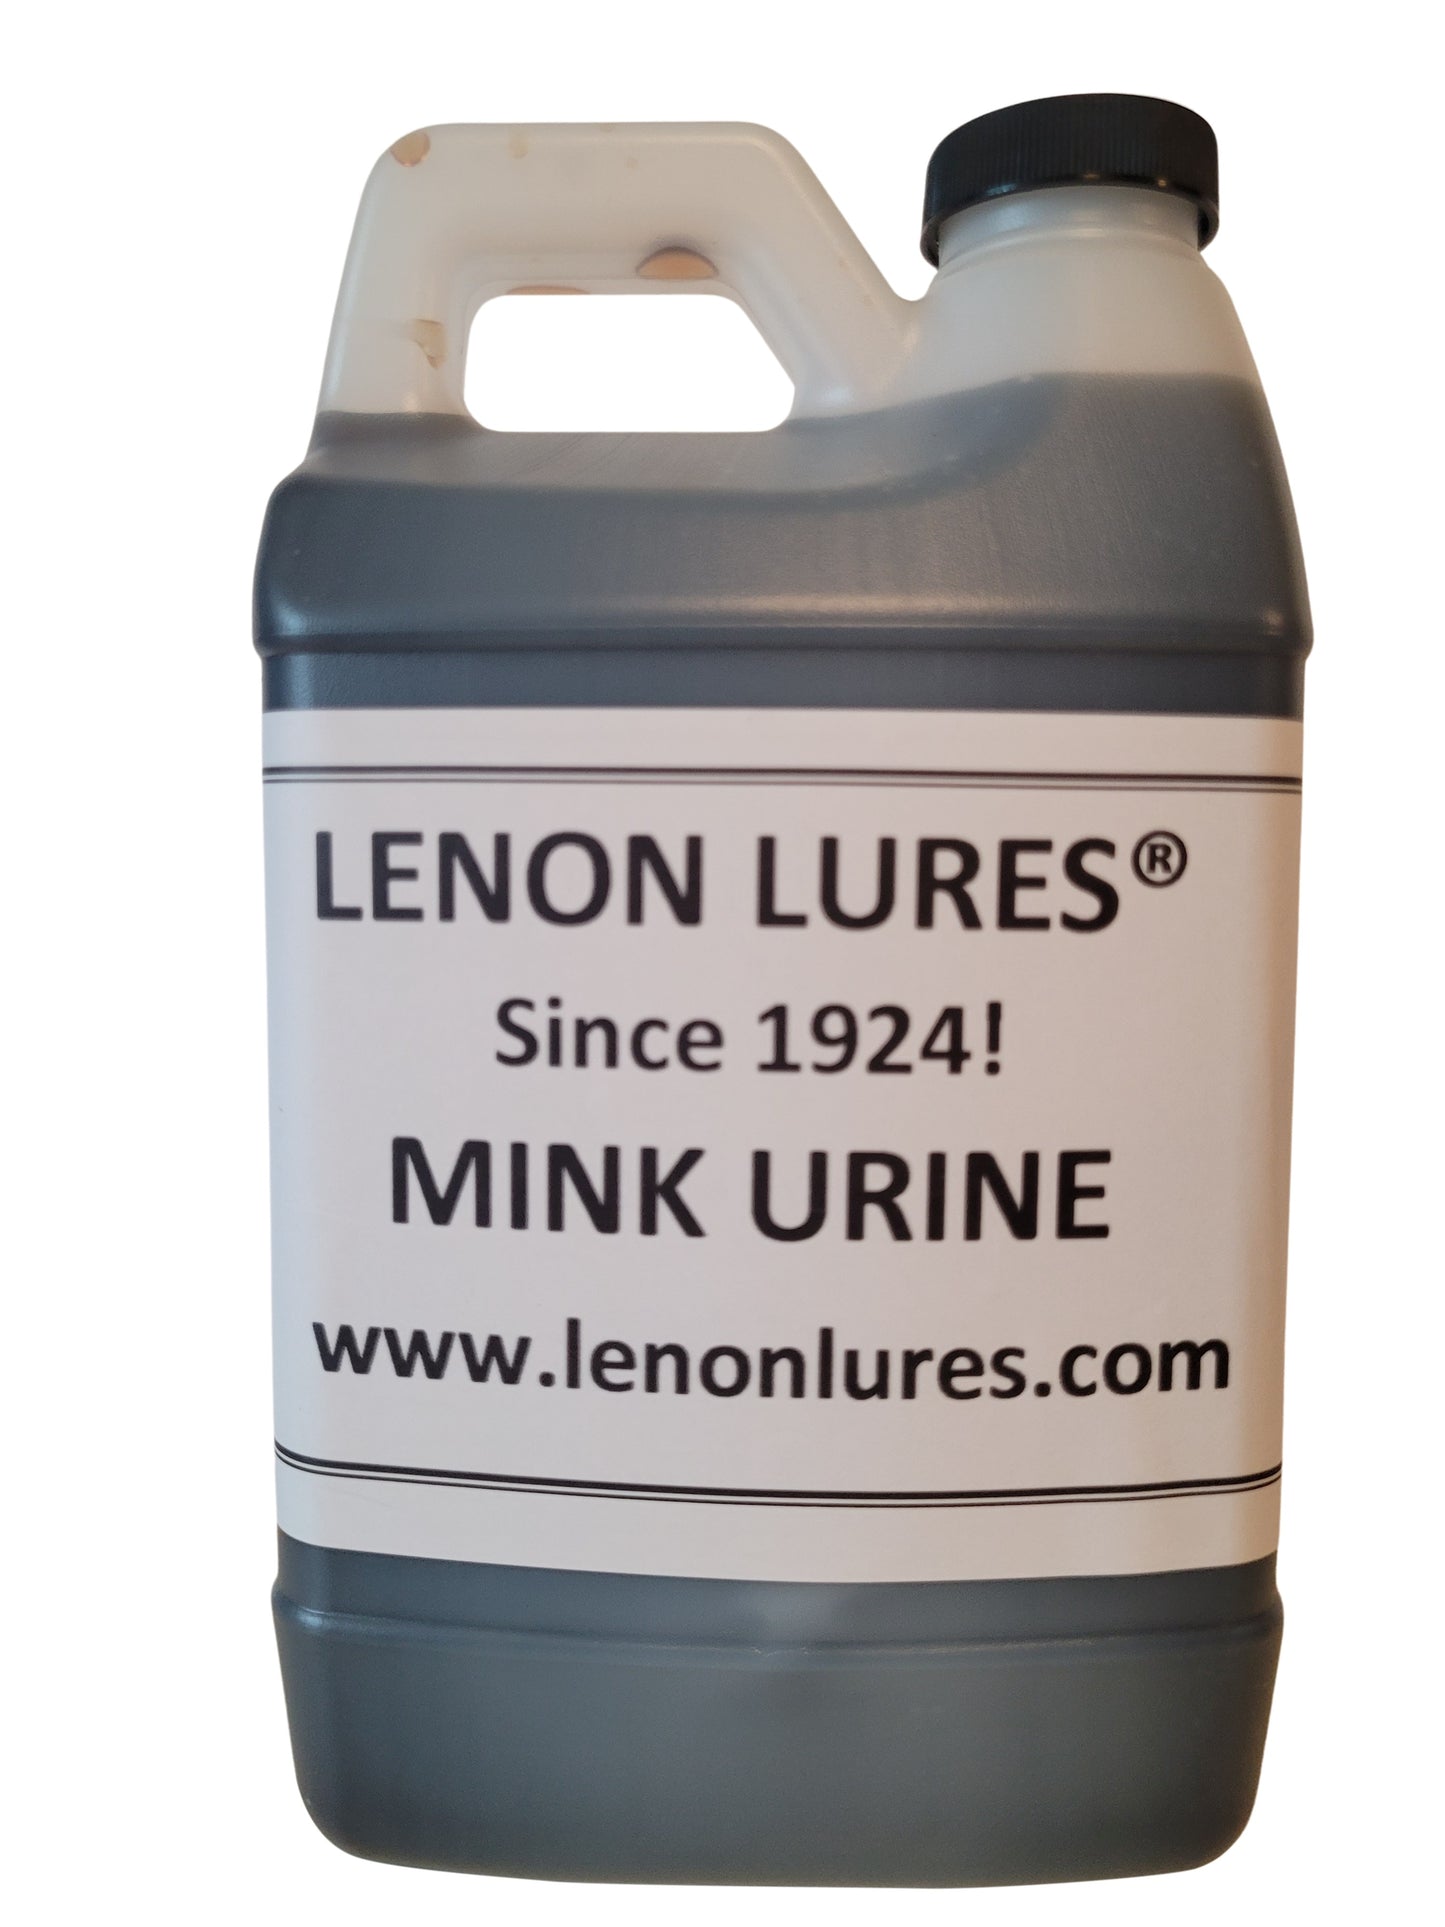 Lenon's Mink Urine